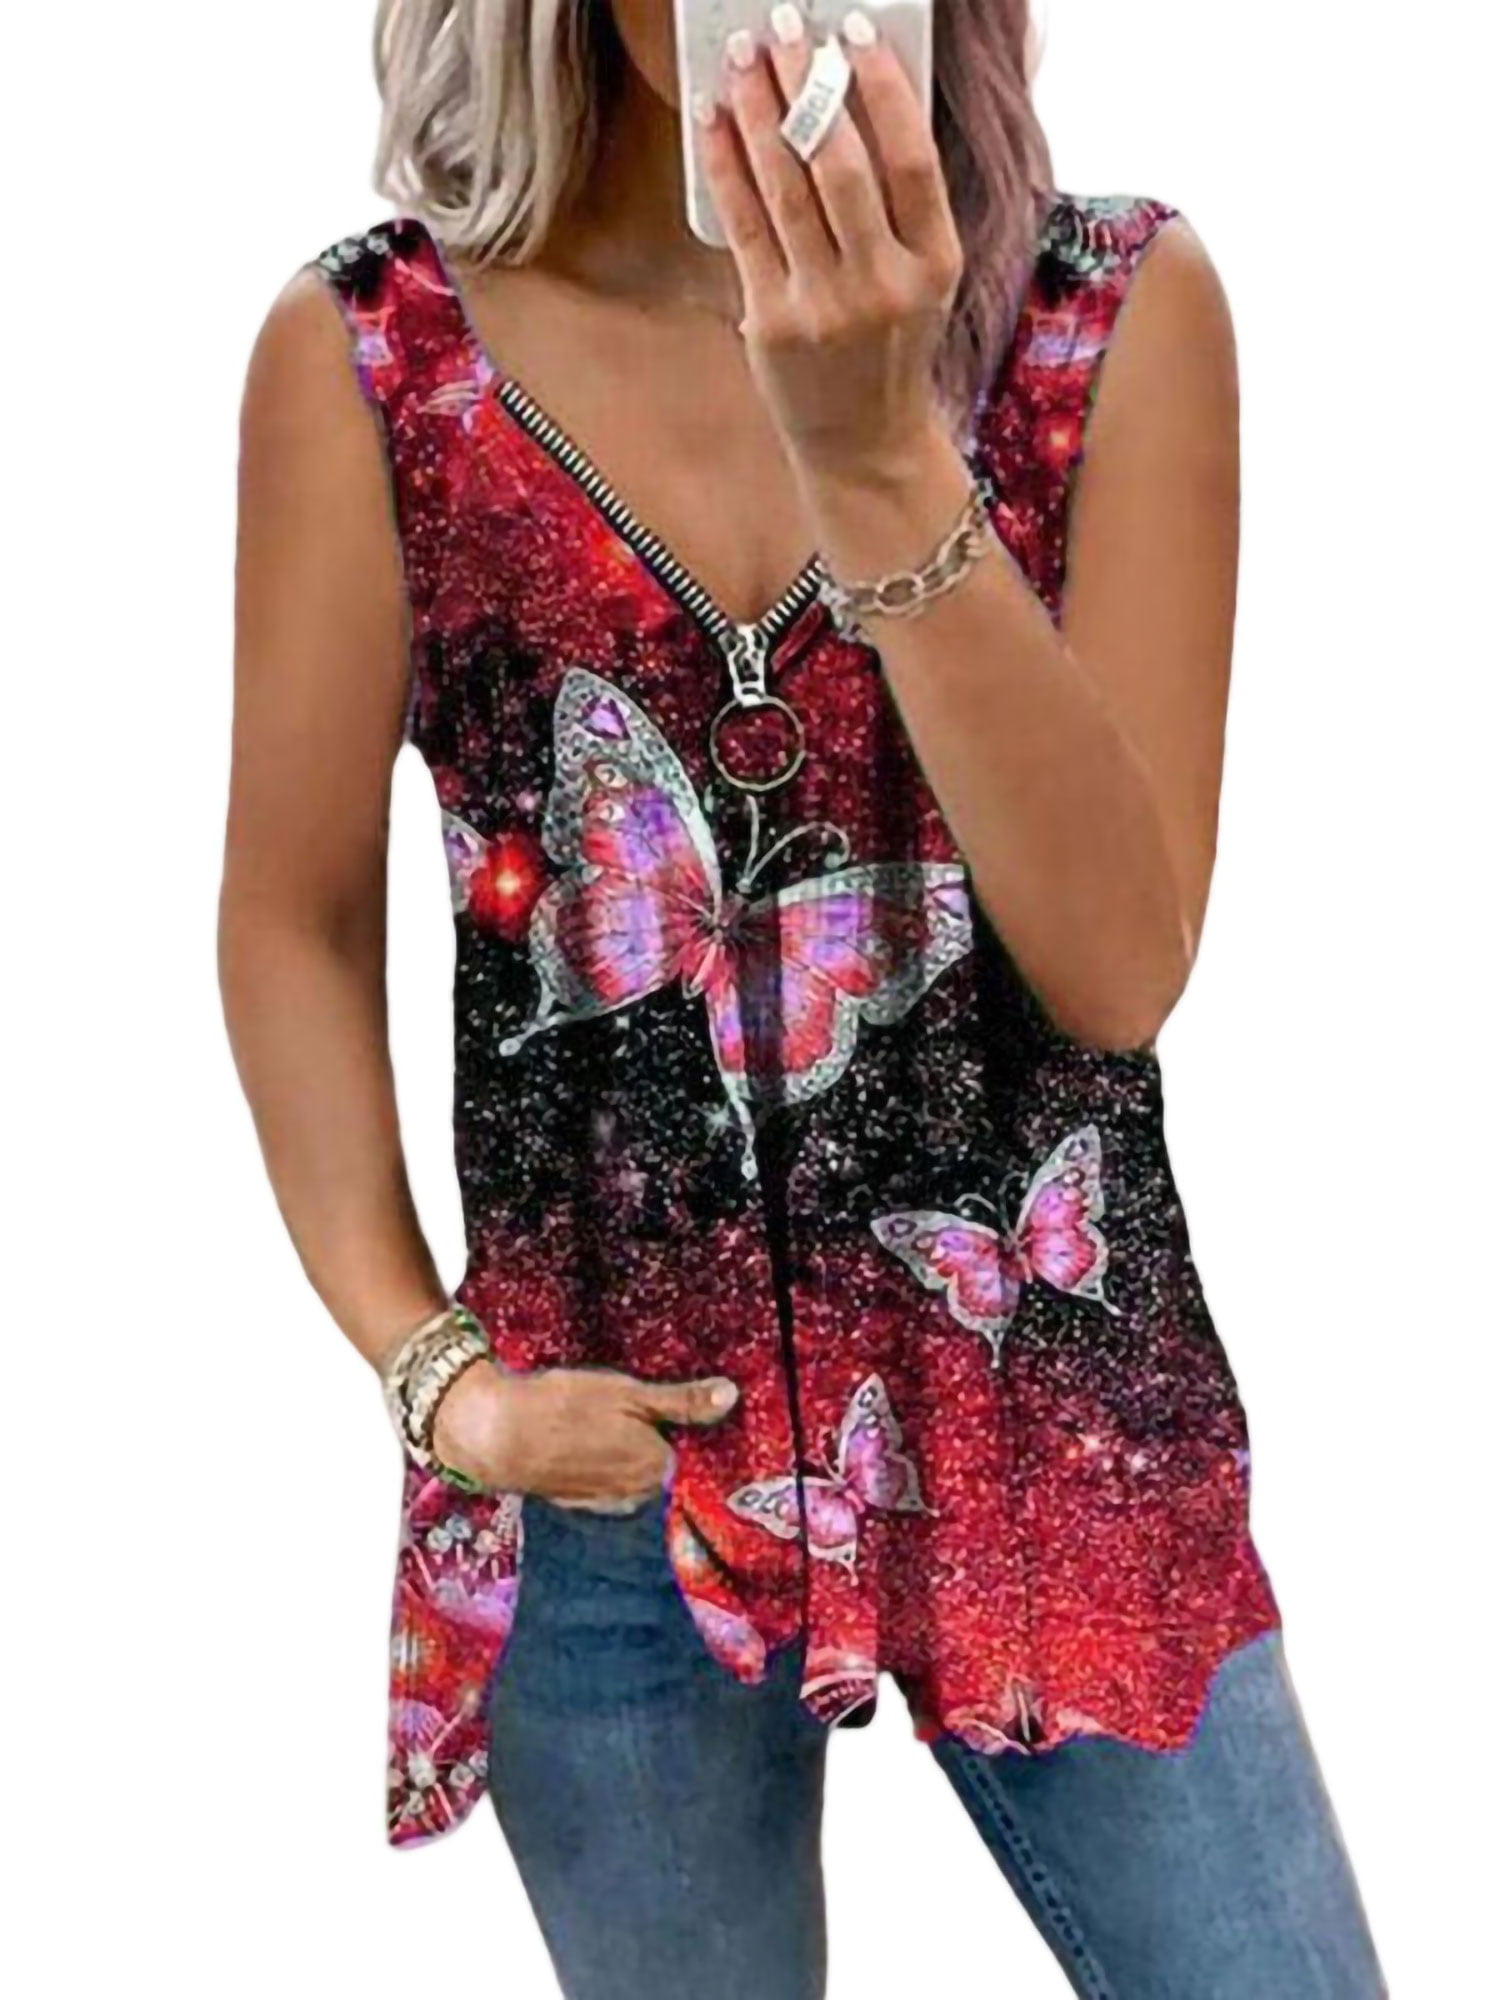 Womens Summer Tops,Sexy Short Sleeves Casual Fashion Sleeveless Rose Print Tunic Top Chain T-Shirt Blouse Shirt Cami Top